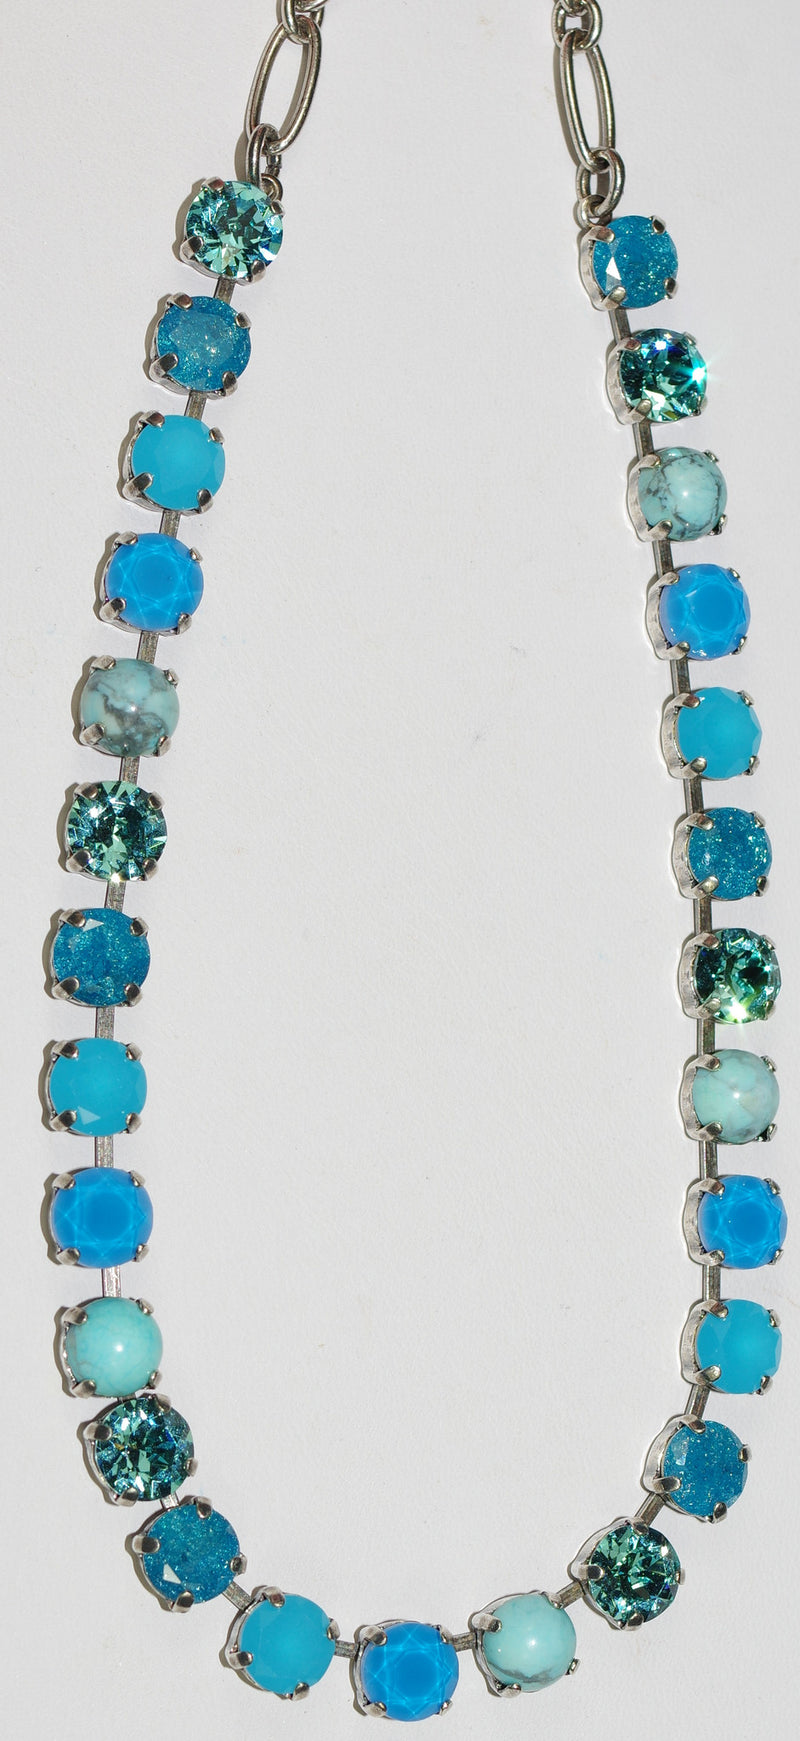 MARIANA NECKLACE BETTE ZAMBEZI: blue, mineral stones in silver setting, 18" adjustable chain